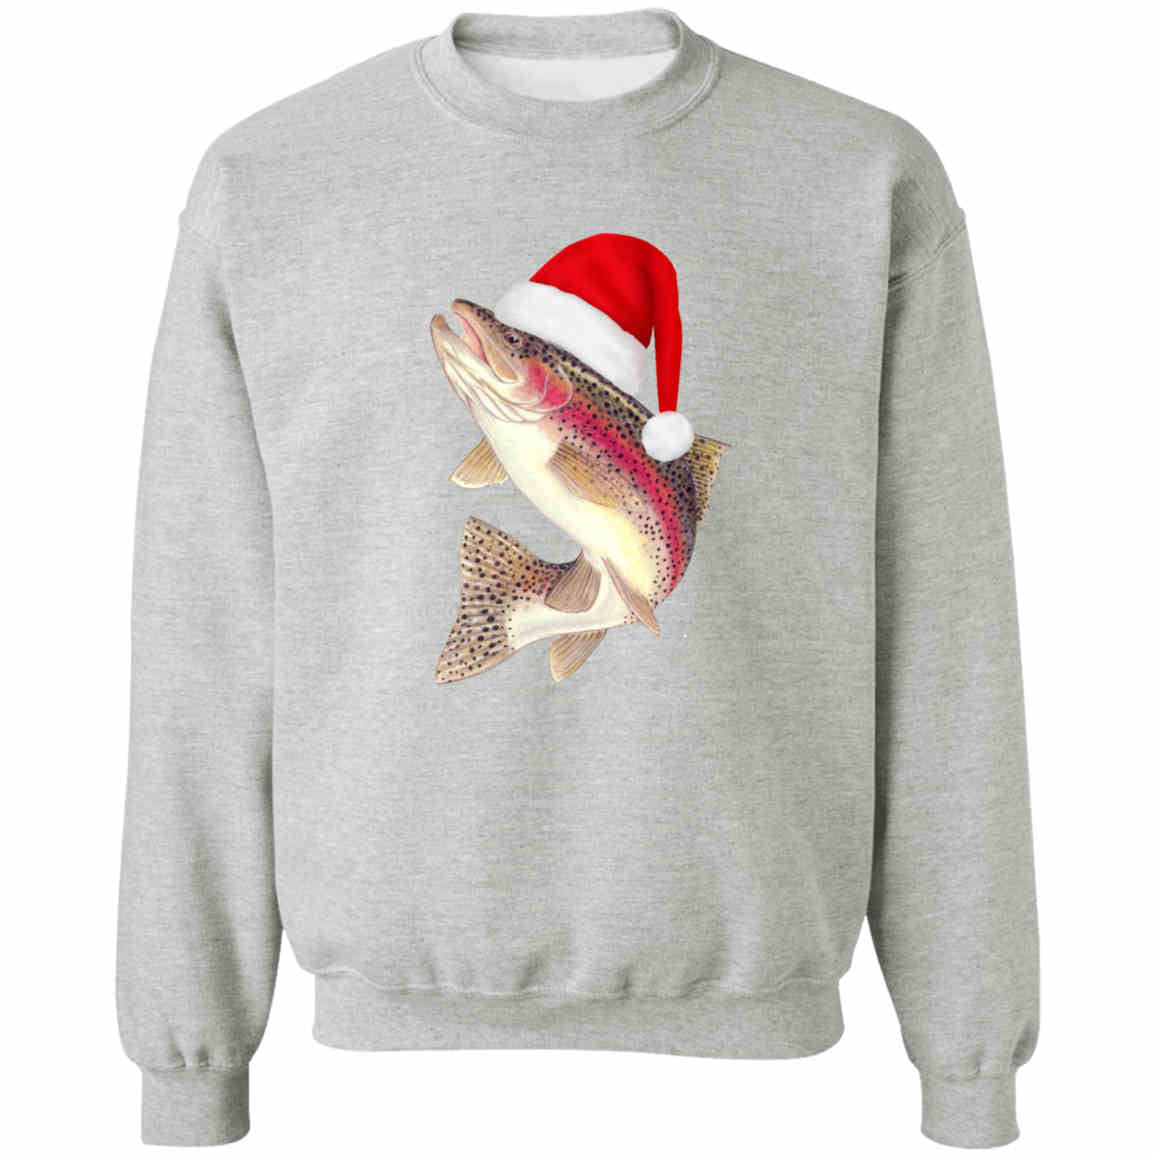 Santa fish sweatshirt sport-grey